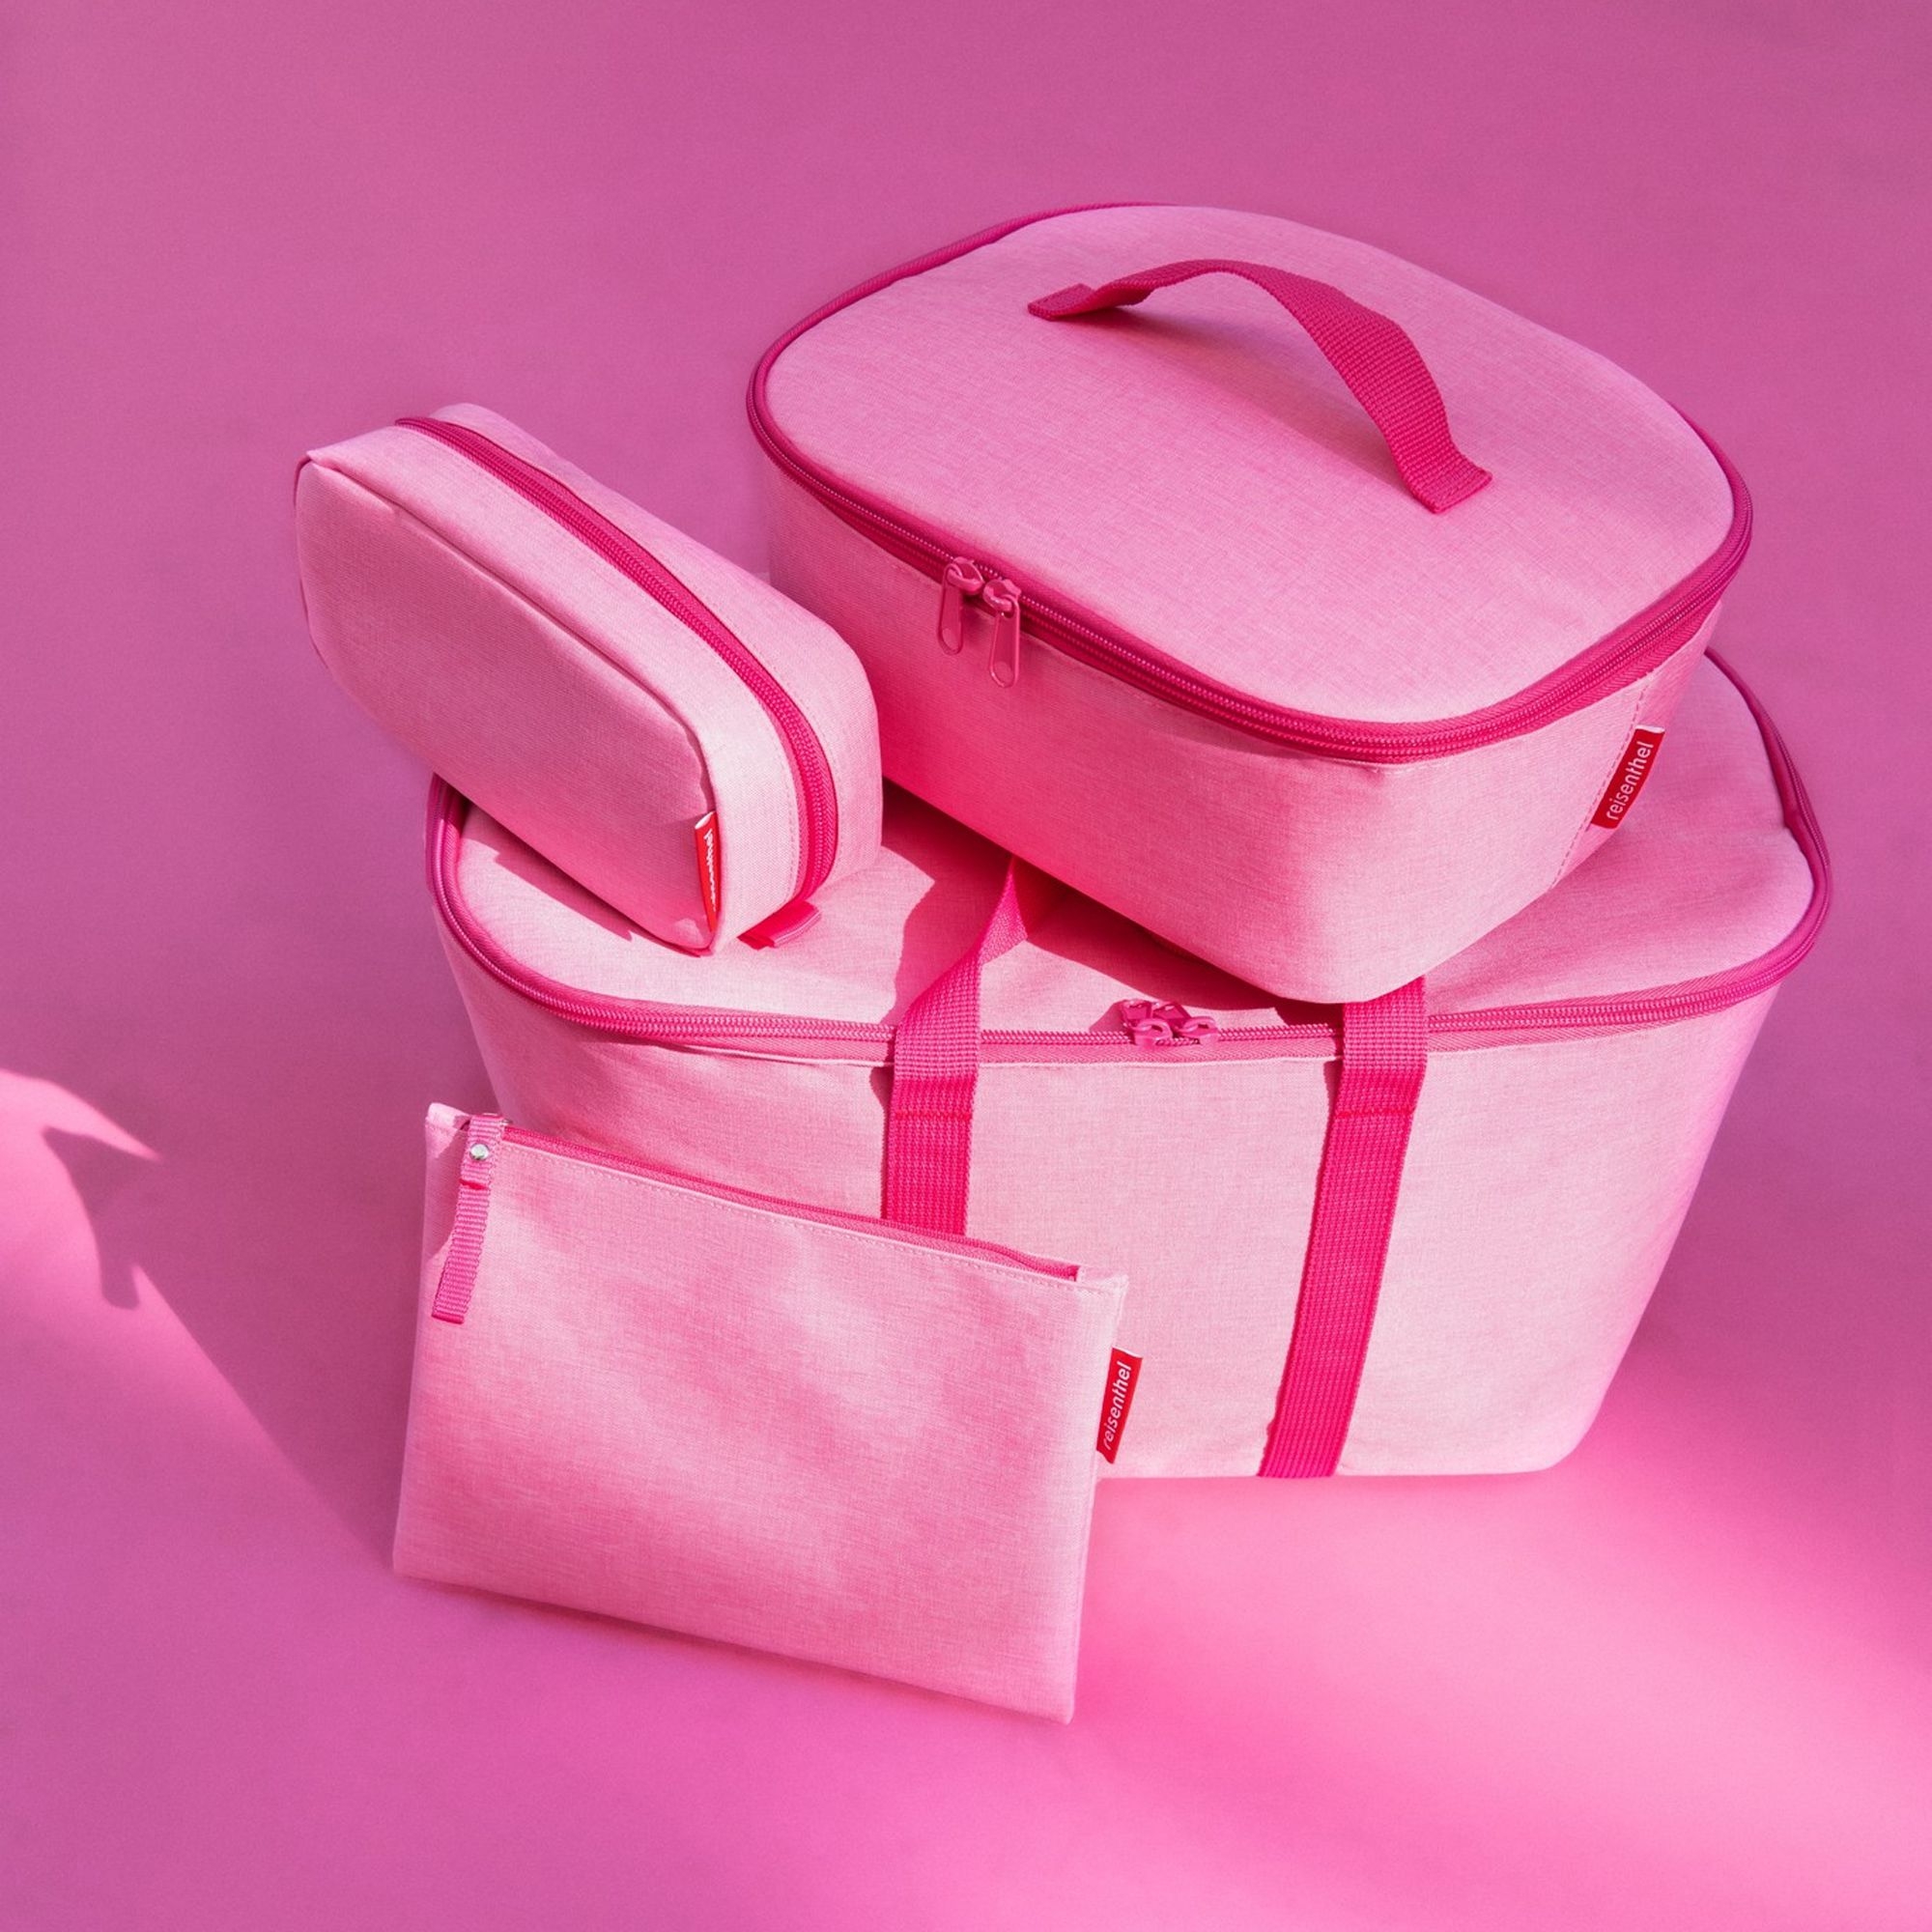 reisenthel - coolerbag S pocket - twist pink